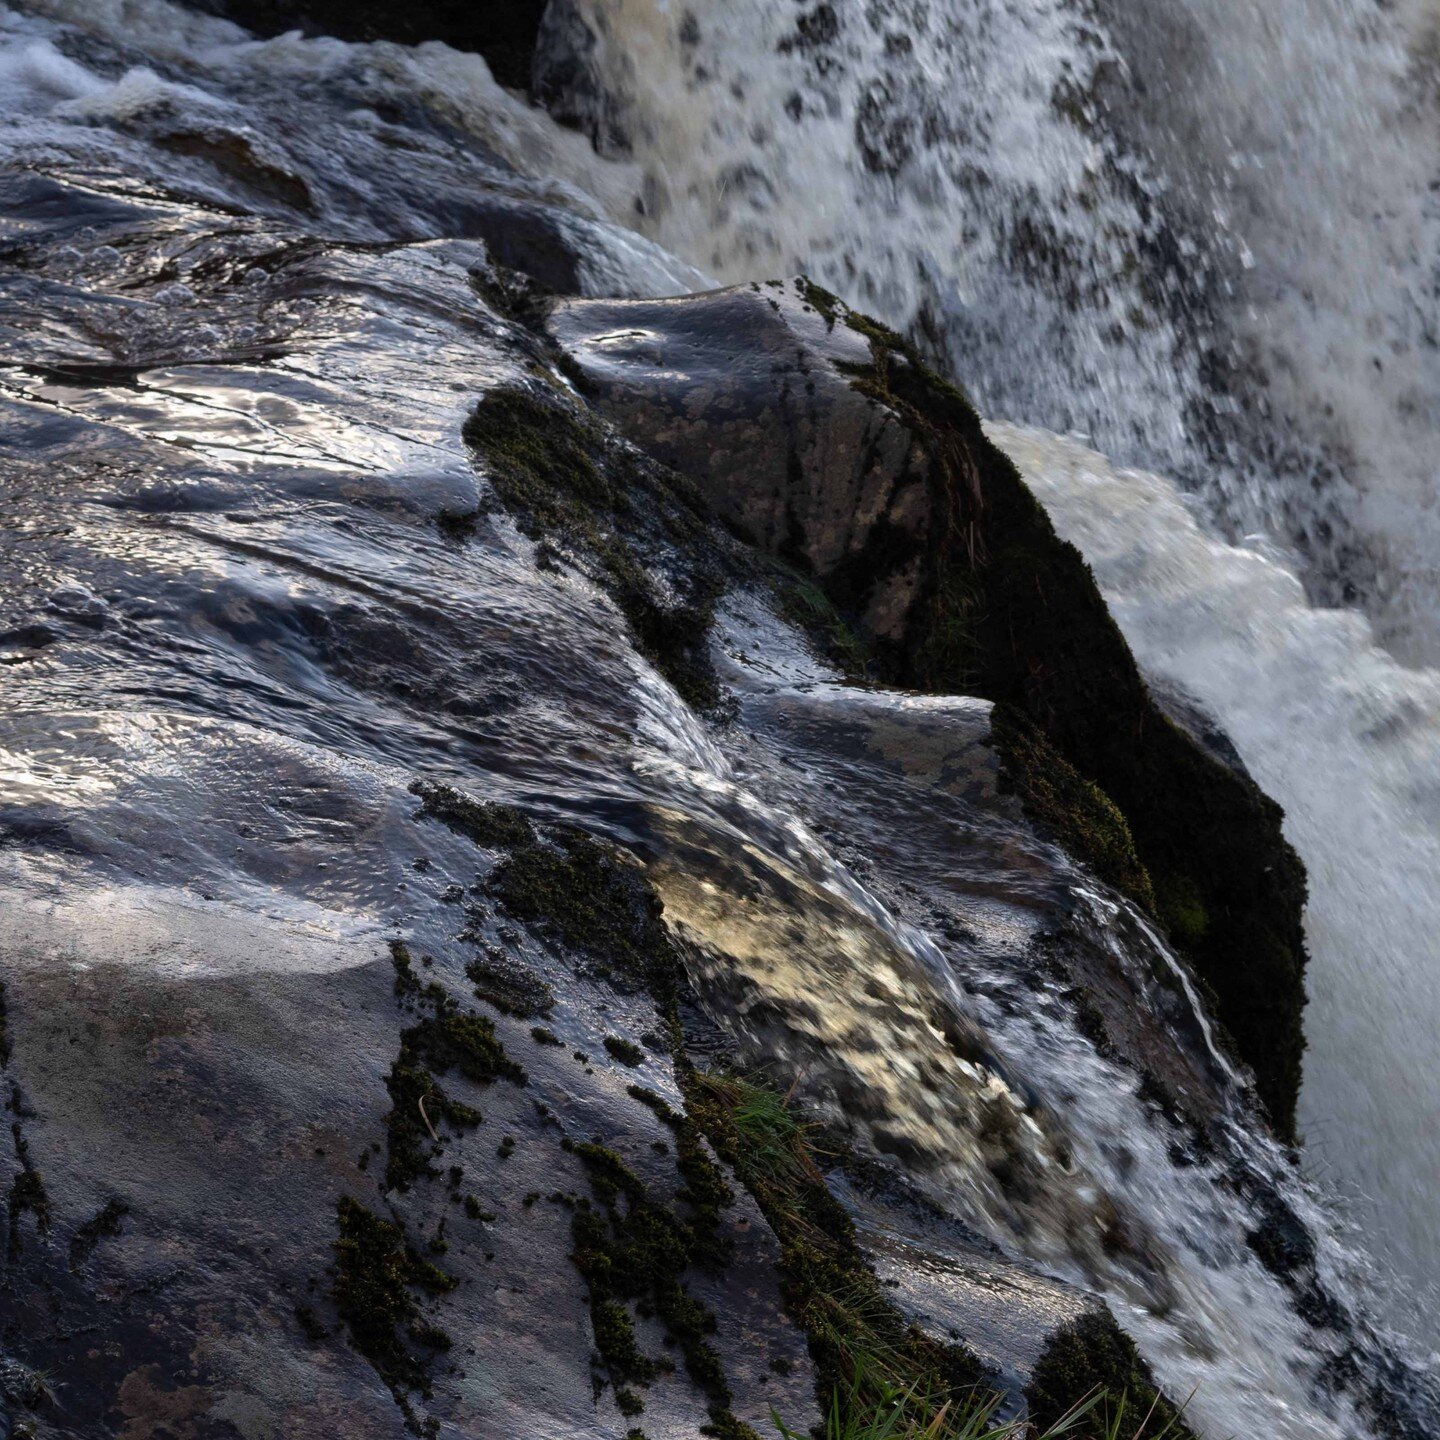 Weekend Waterfall hunting - The Loup of Fintry and Inversnaid Falls on Loch Lomond
.
.
#scotlandisbeautiful #waterfalls #cascadingwater #exploringscotland #loupoffintry #inversnaidfalls #shapeofwater #cascading #textureofwater #womenphotographers